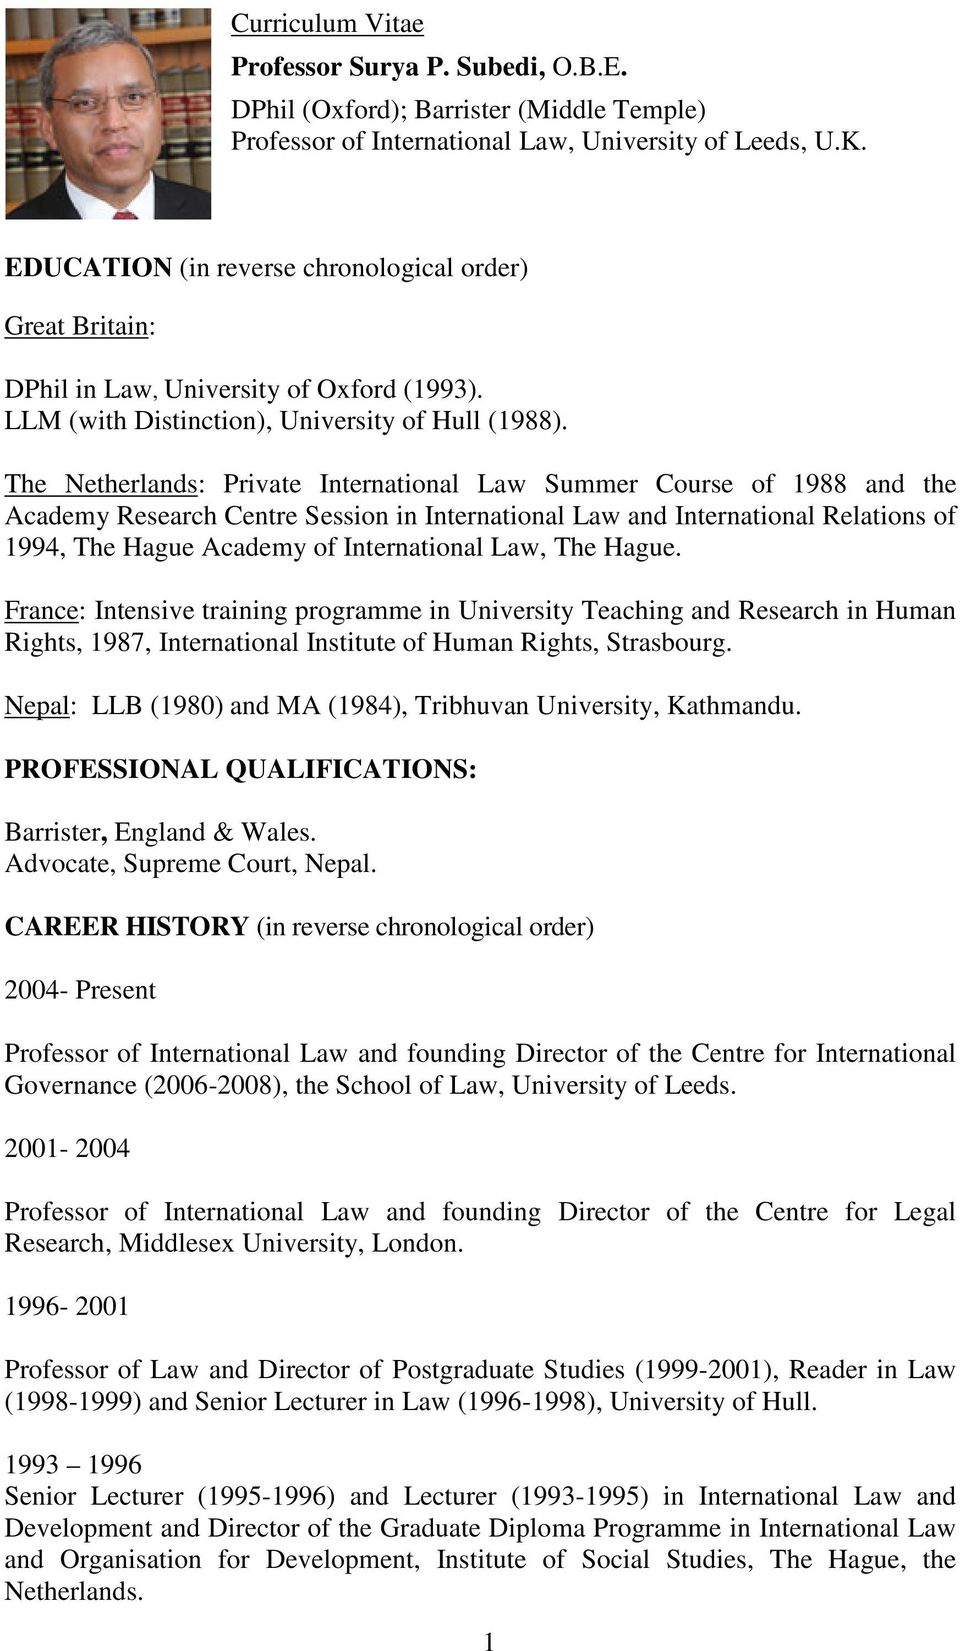 Curriculum Vitae Professor Surya P Subedi O B E Dphil Oxford